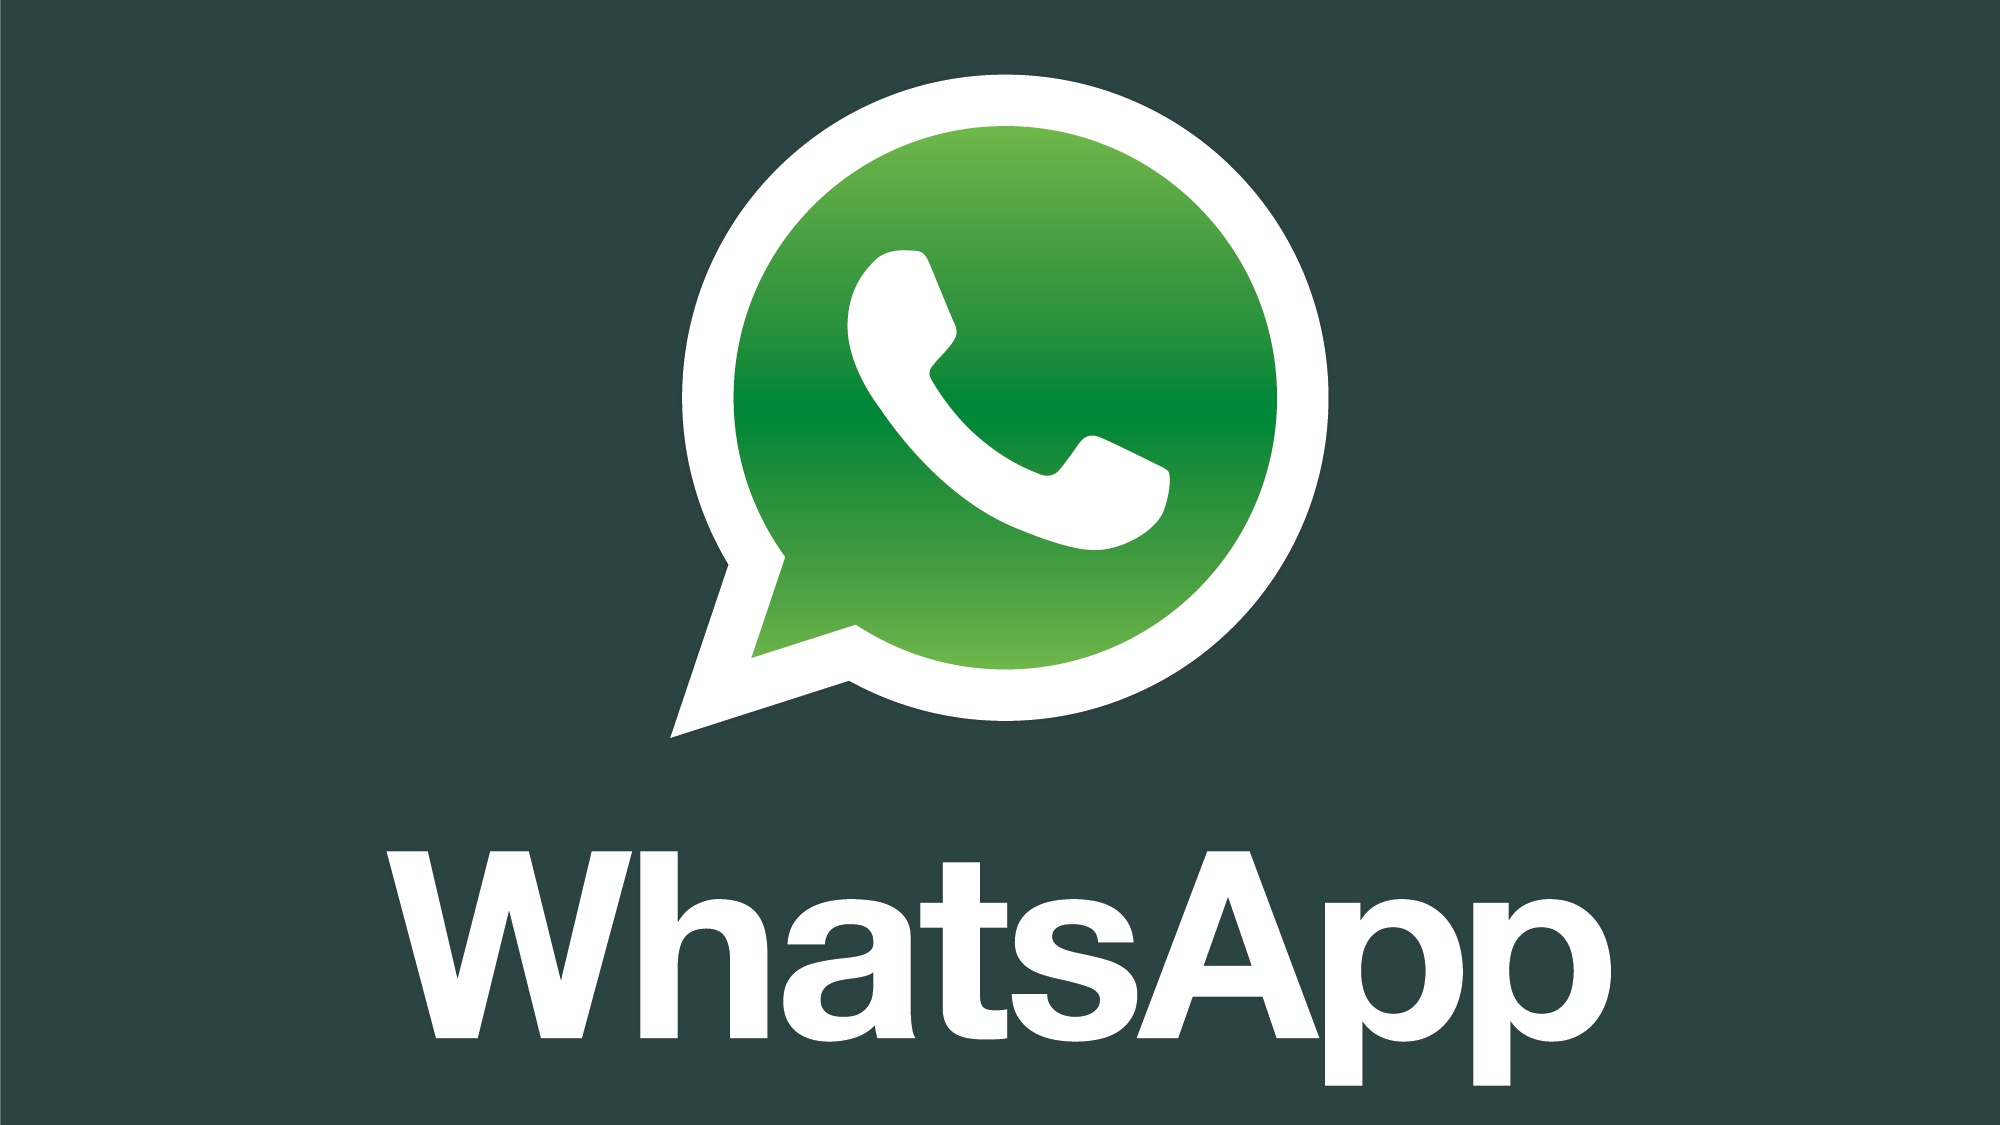 WhatsApp is down on all platforms - WhatsApp